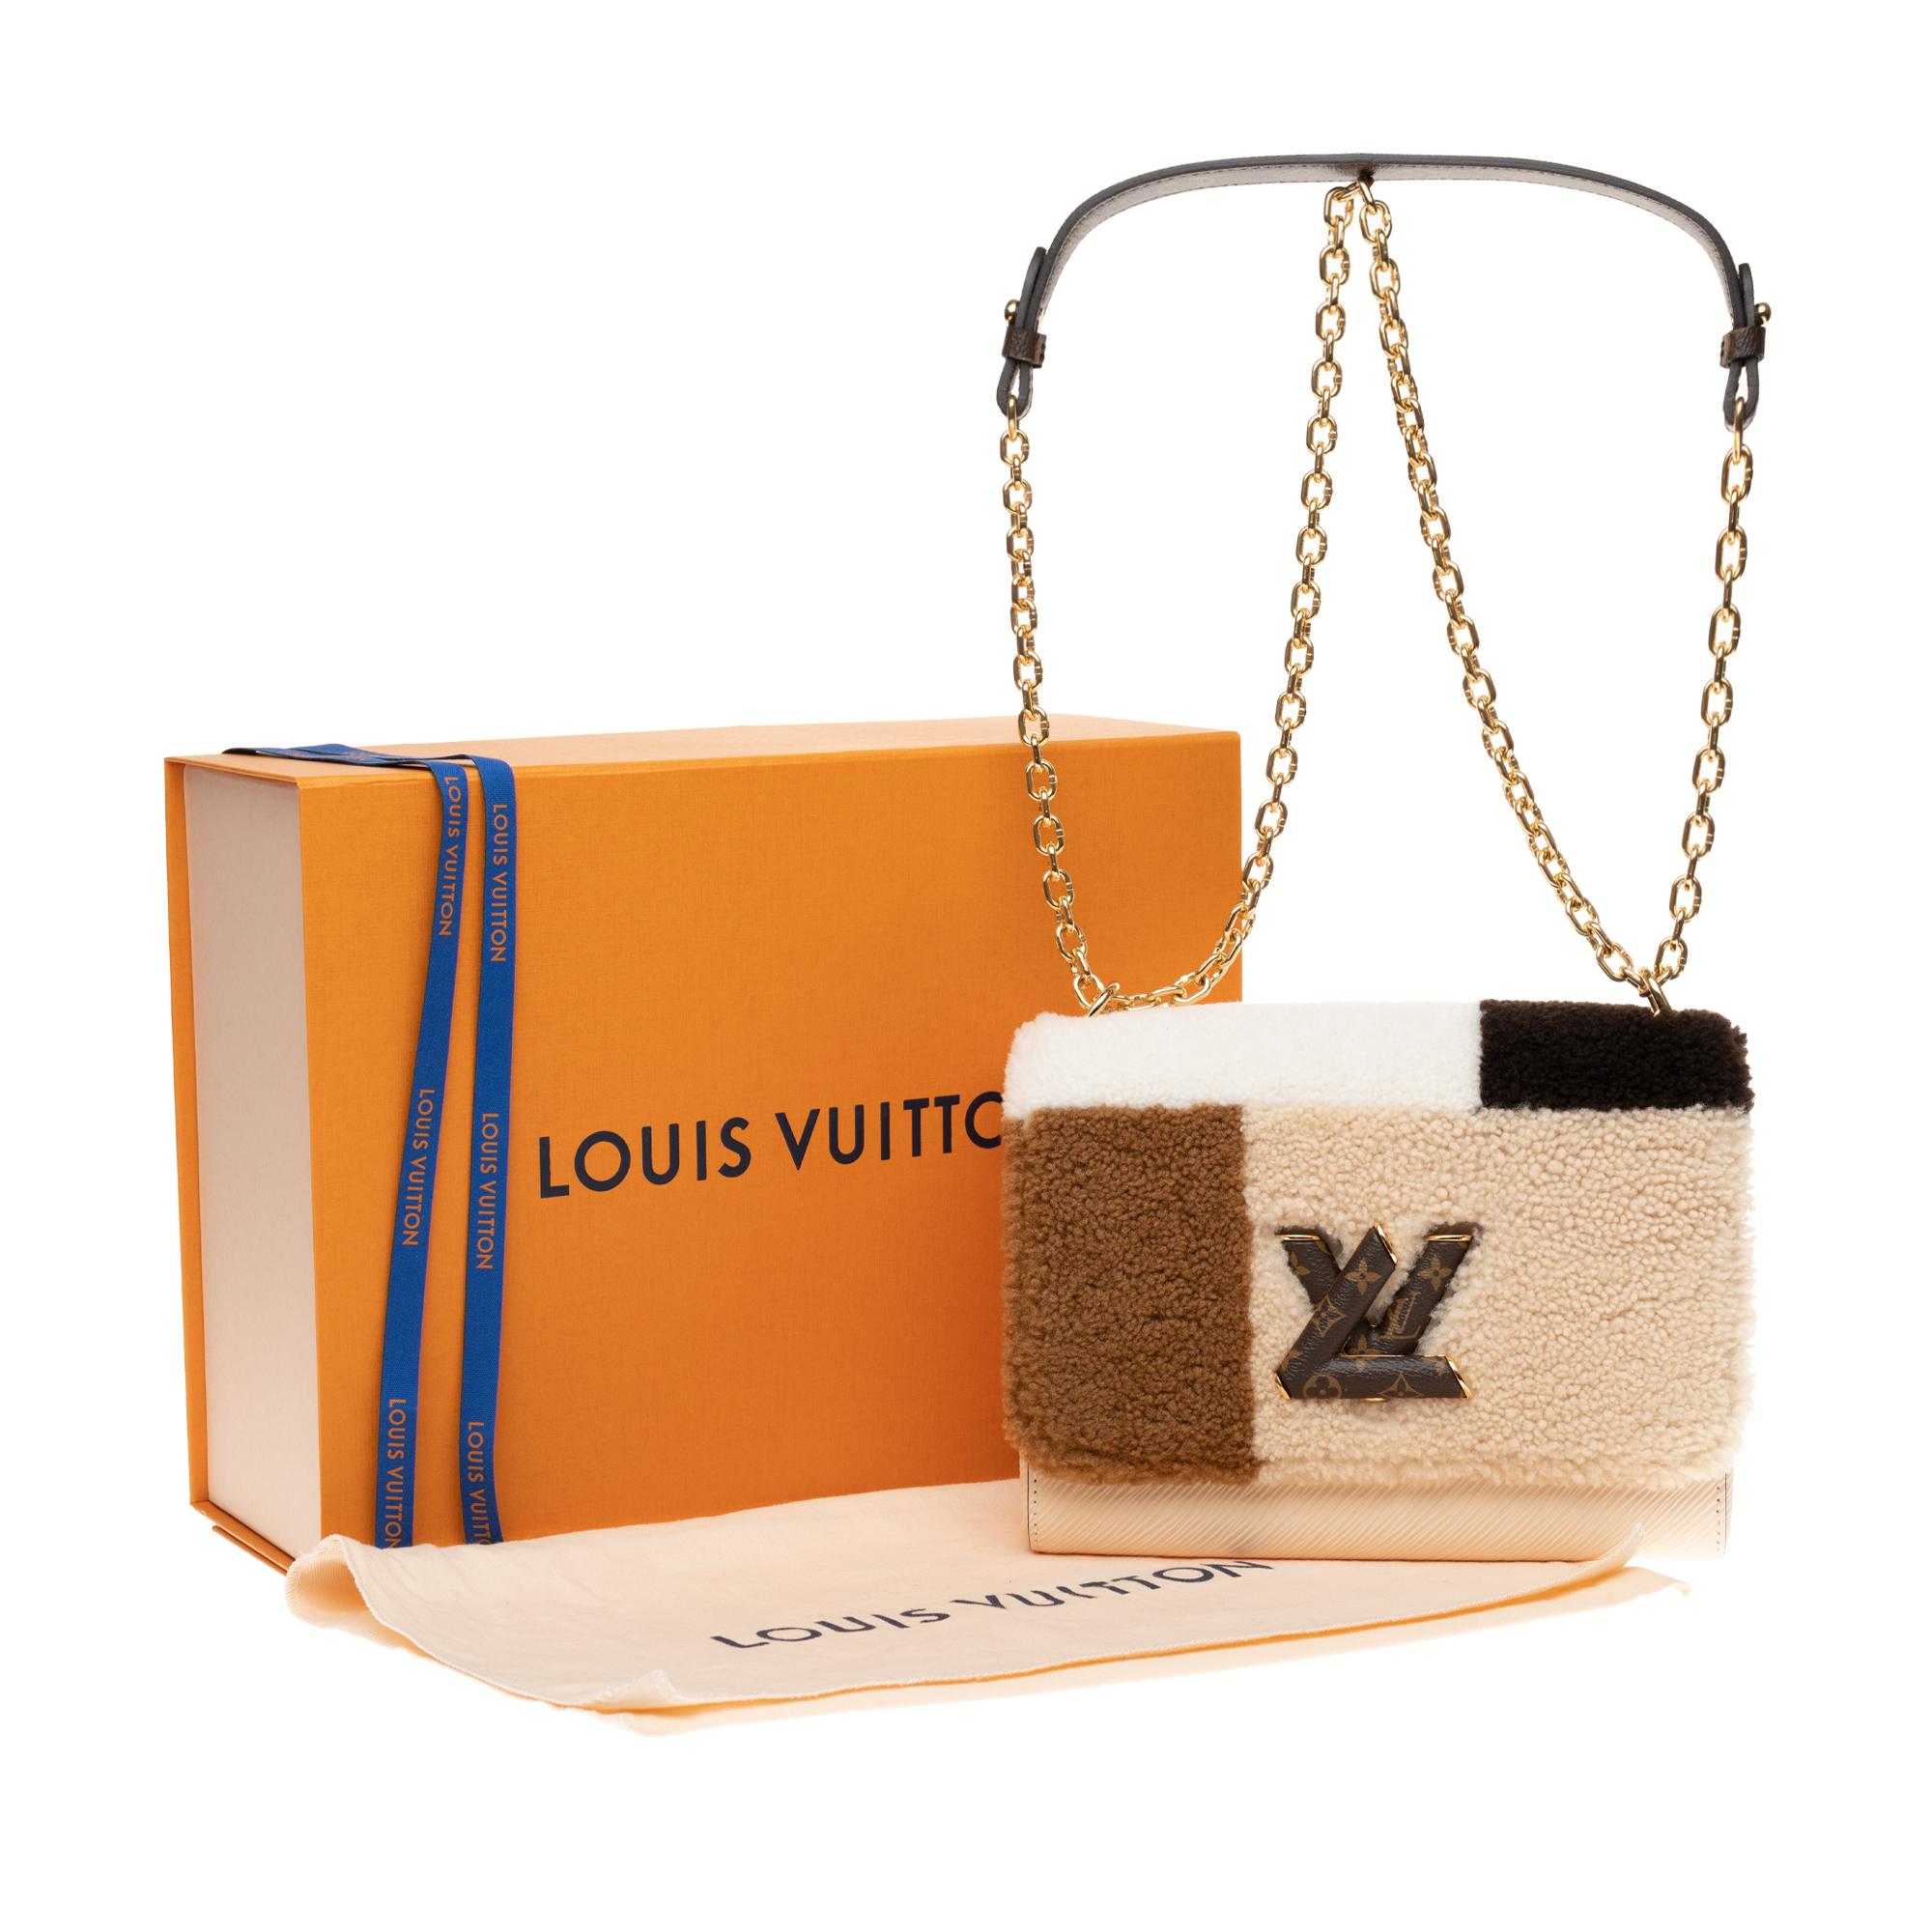 BRAND NEW ultra Limited Edition Louis Vuitton Twist Teddy Fleece MM handbag 6